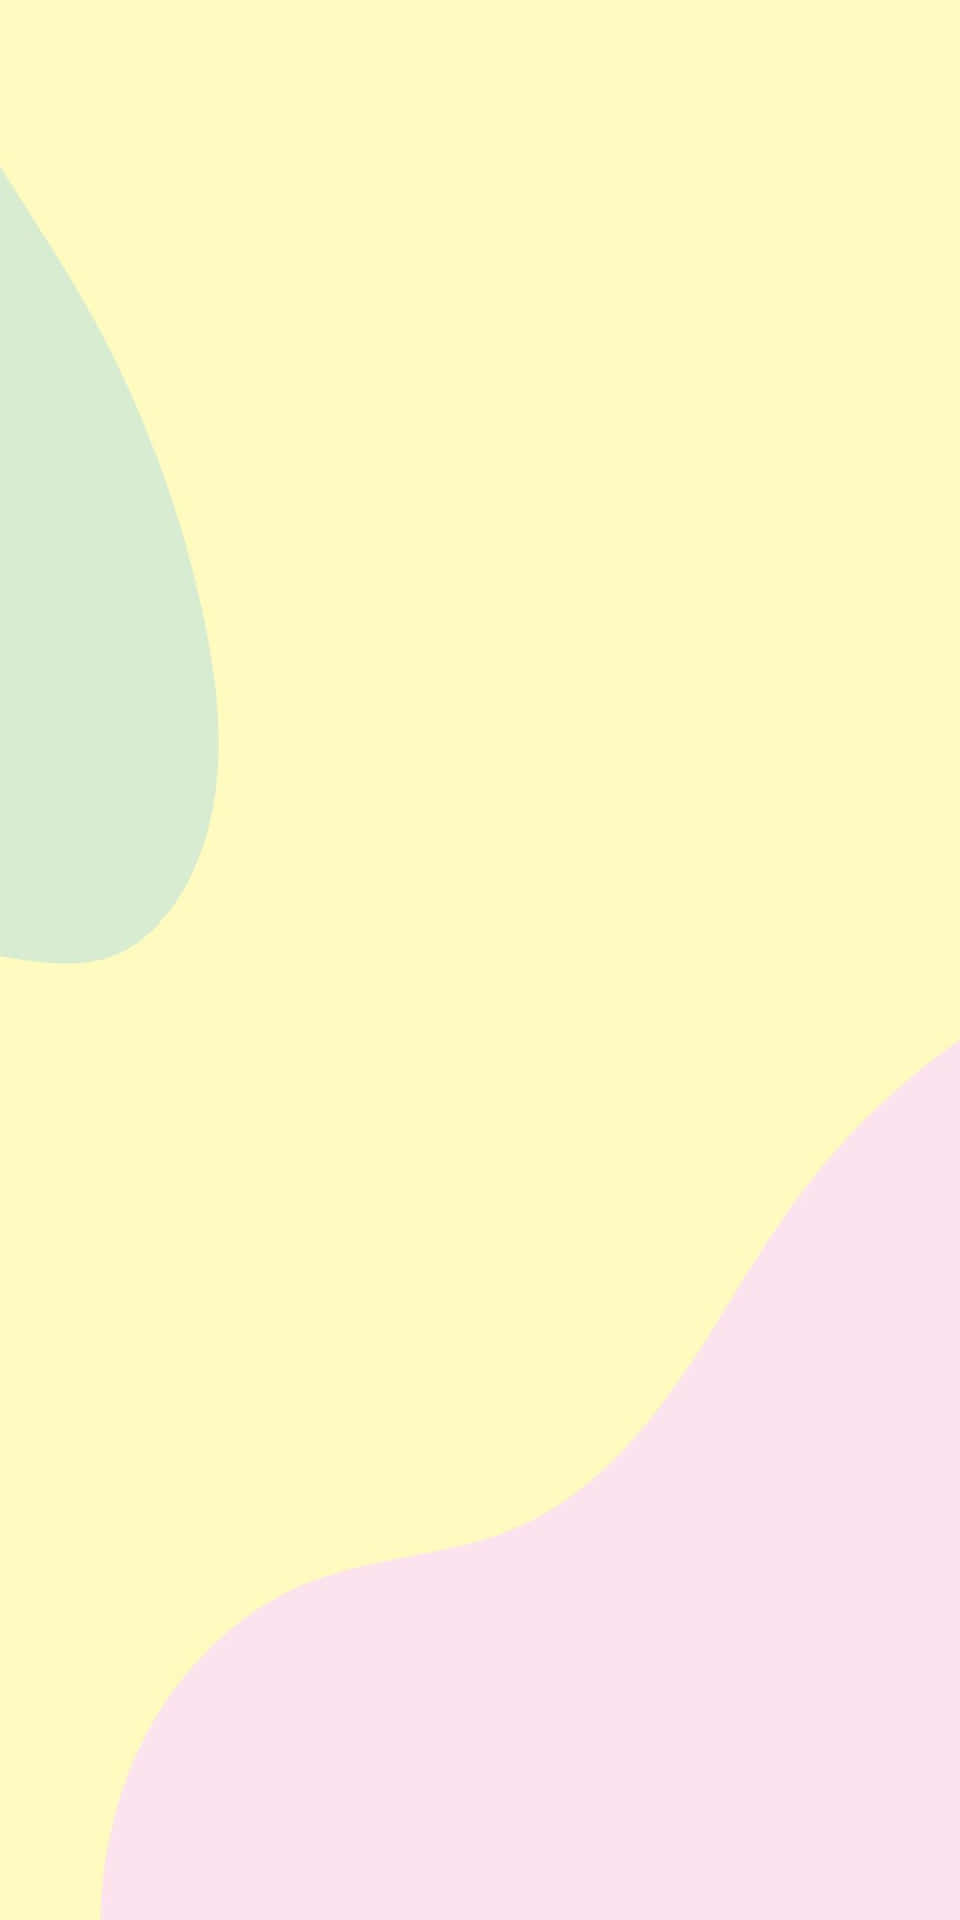 Fondodel Pixel 3 Con Colores Pasteles Simples.